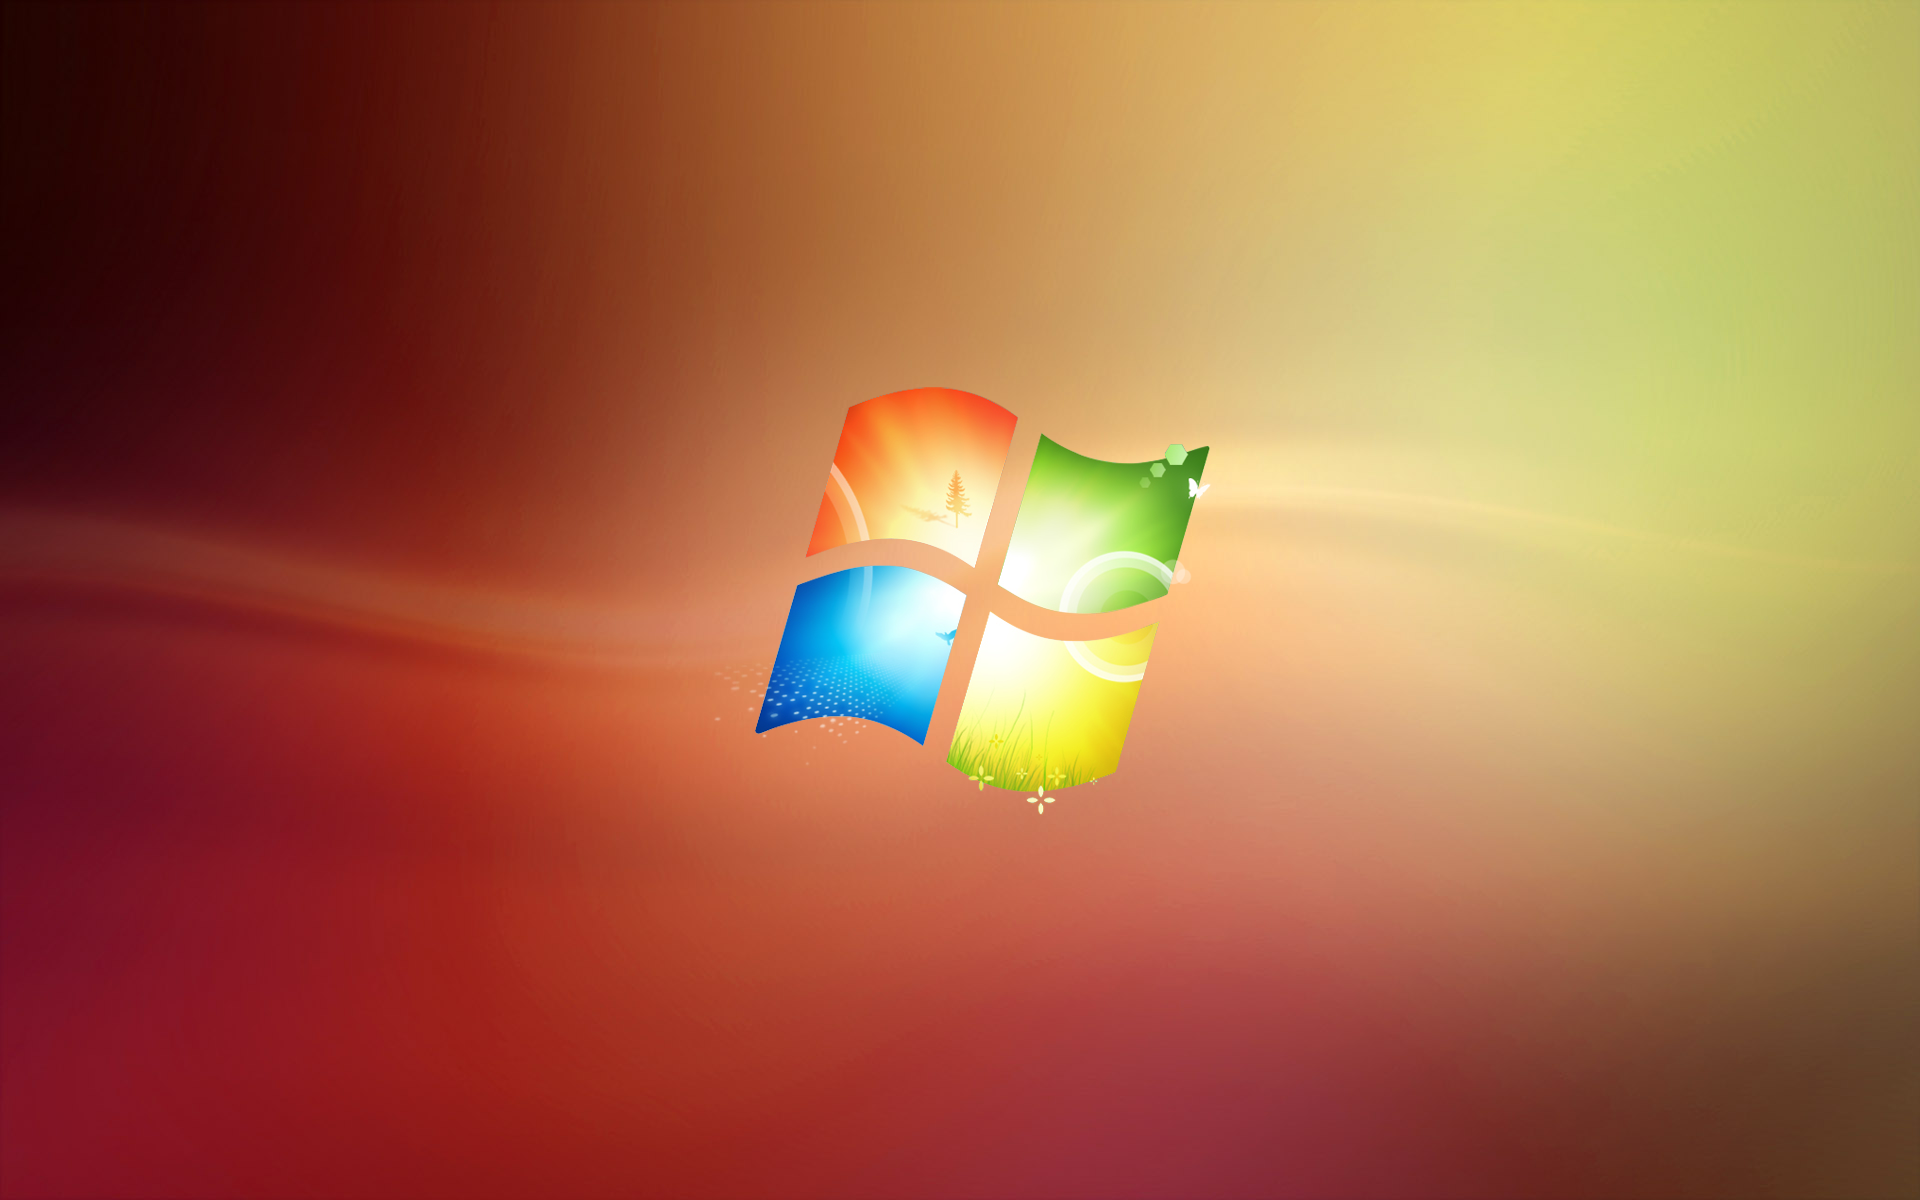 Windows 7 Starter Wallpapers in HD for Desktop